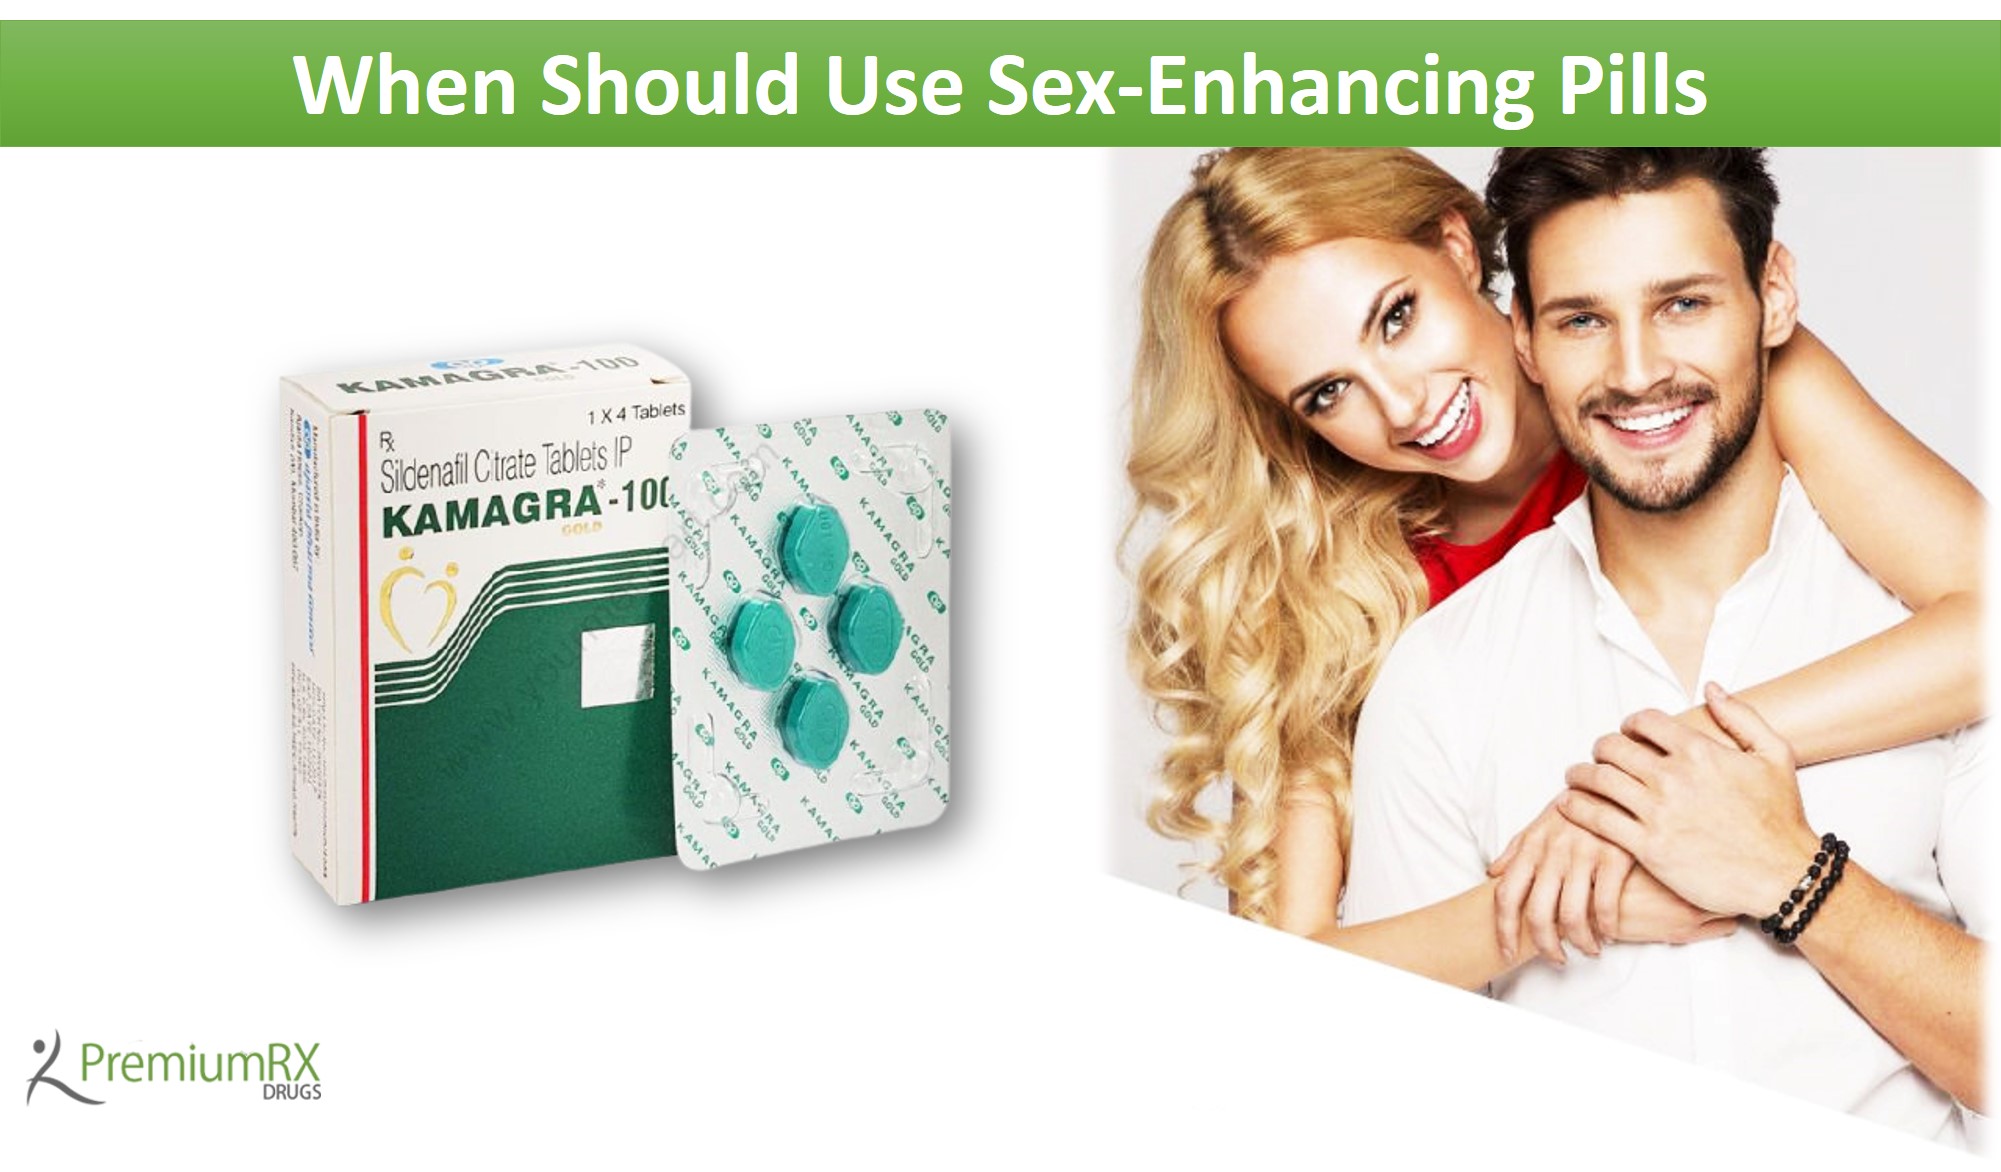 When Should Use Sex-Enhancing Pills